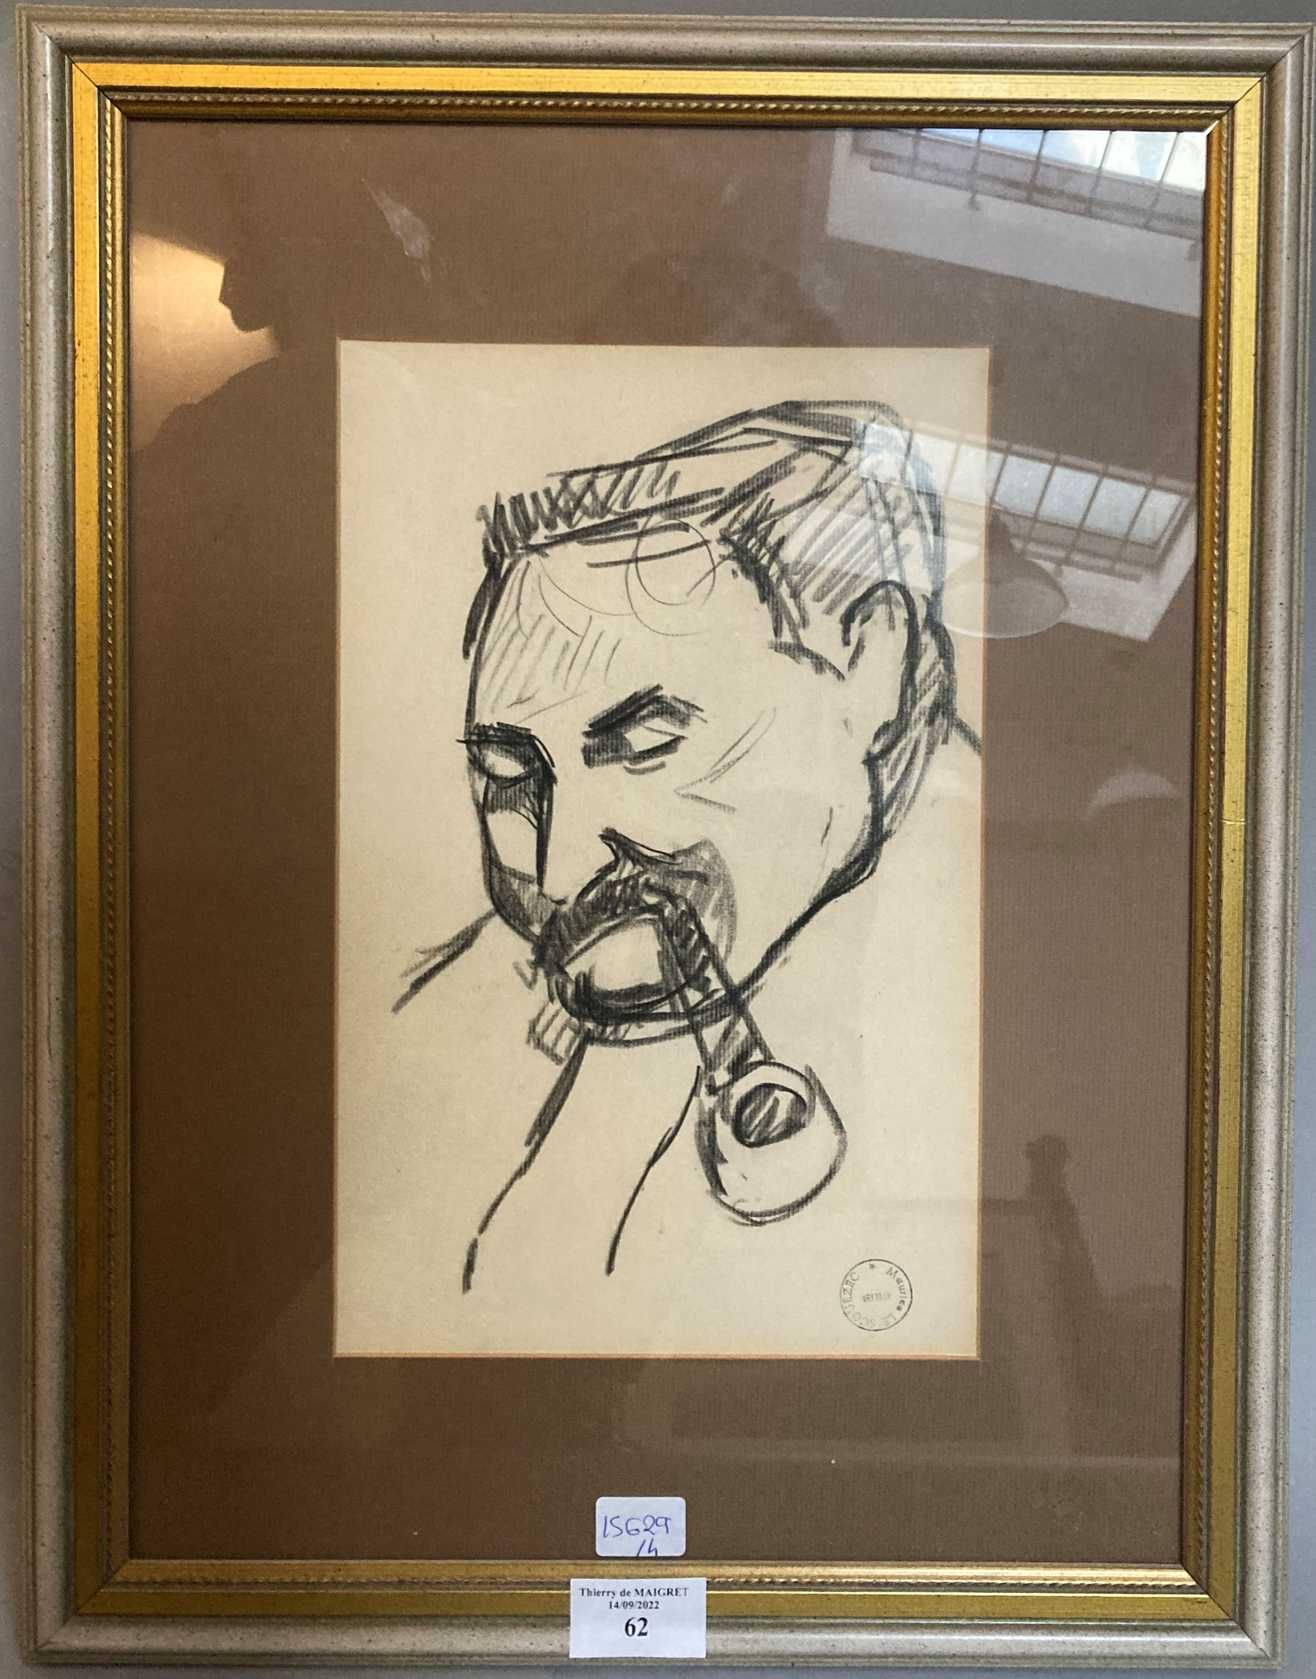 Null 叼着烟斗的男人画像

纸上炭笔

莫里斯-勒-斯库埃泽克工作室的邮票

28,5 x 18 cm